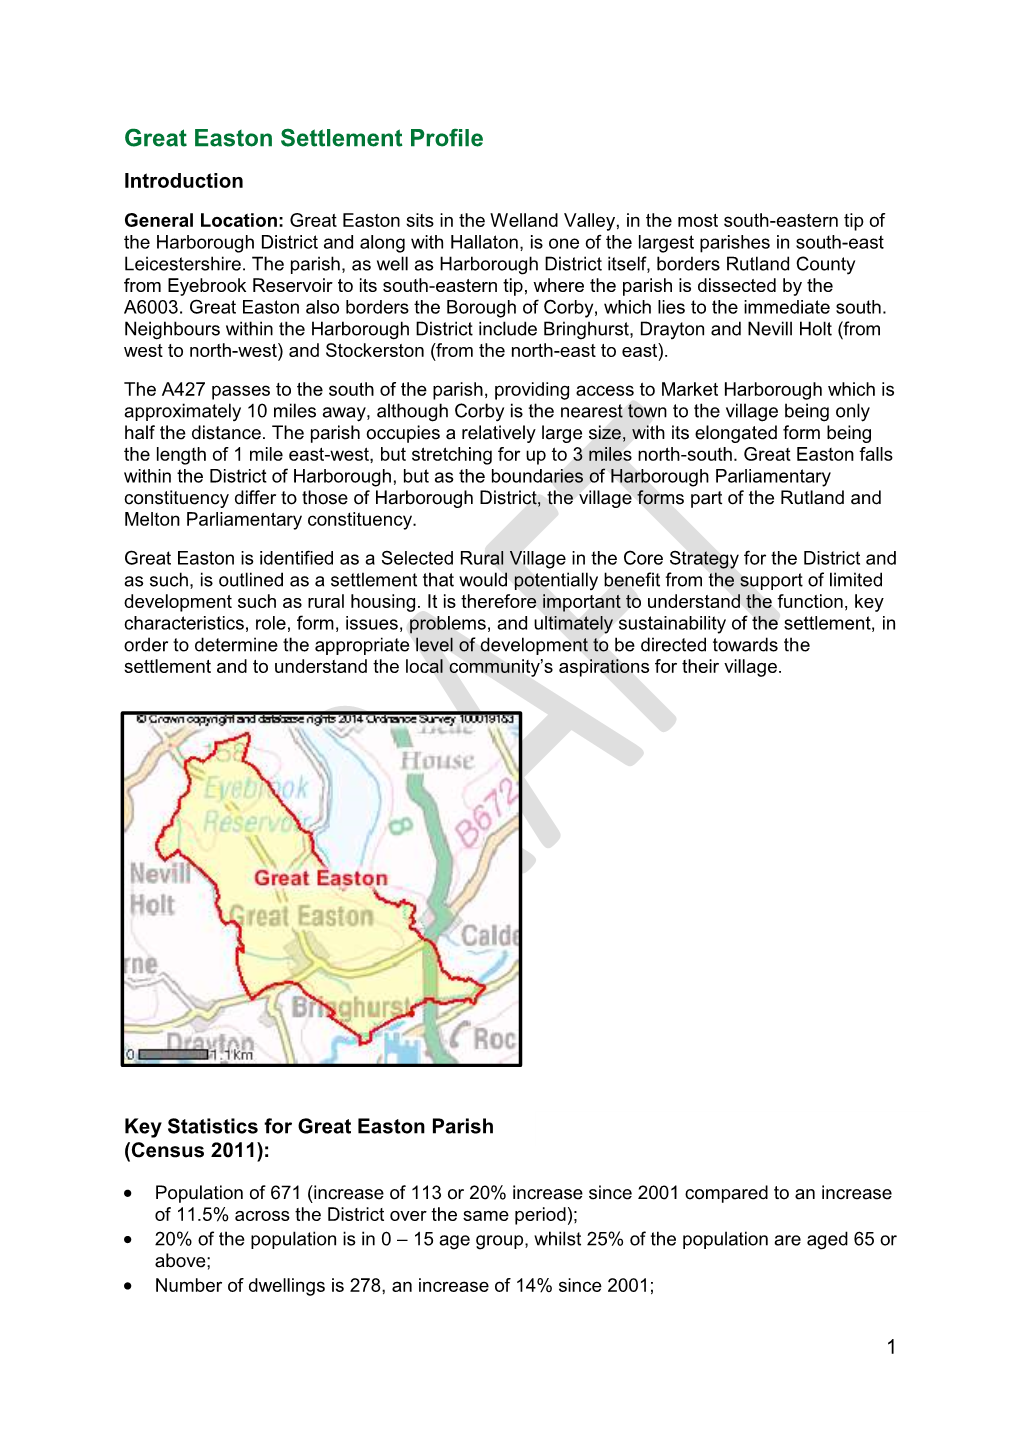 Great Easton Settlement Profile Introduction